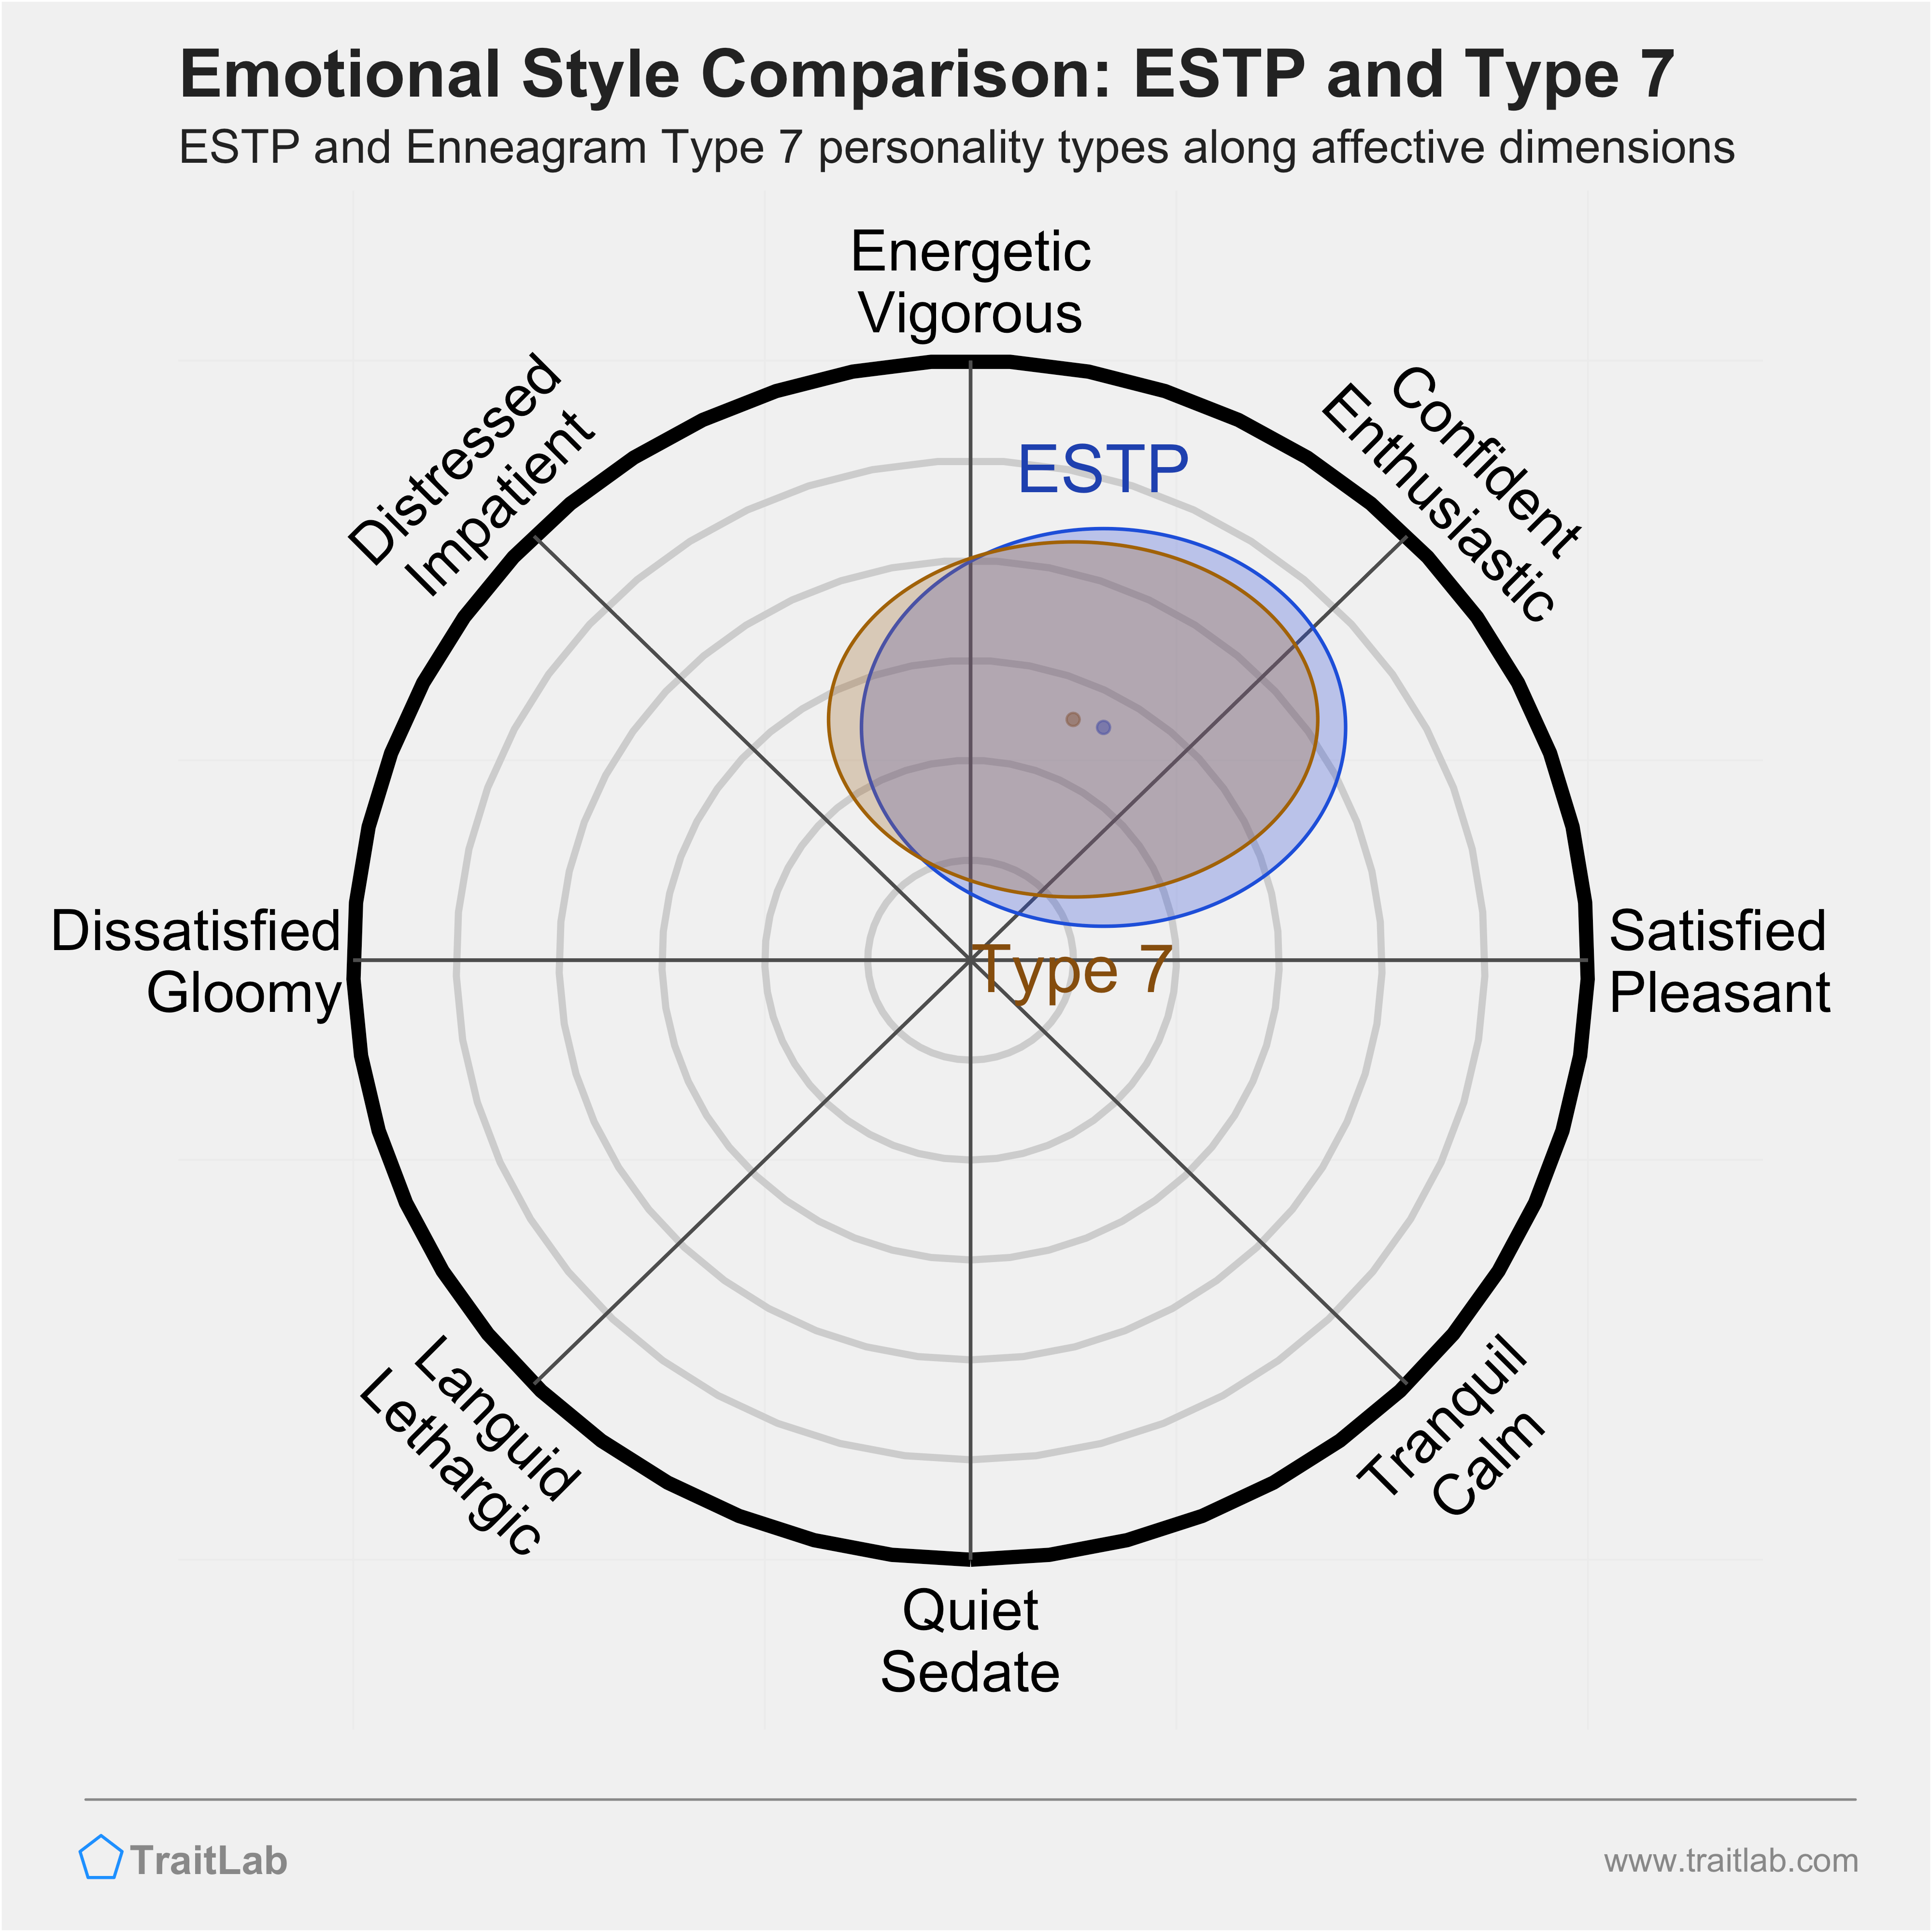 ESTP and Type 7 comparison across emotional (affective) dimensions